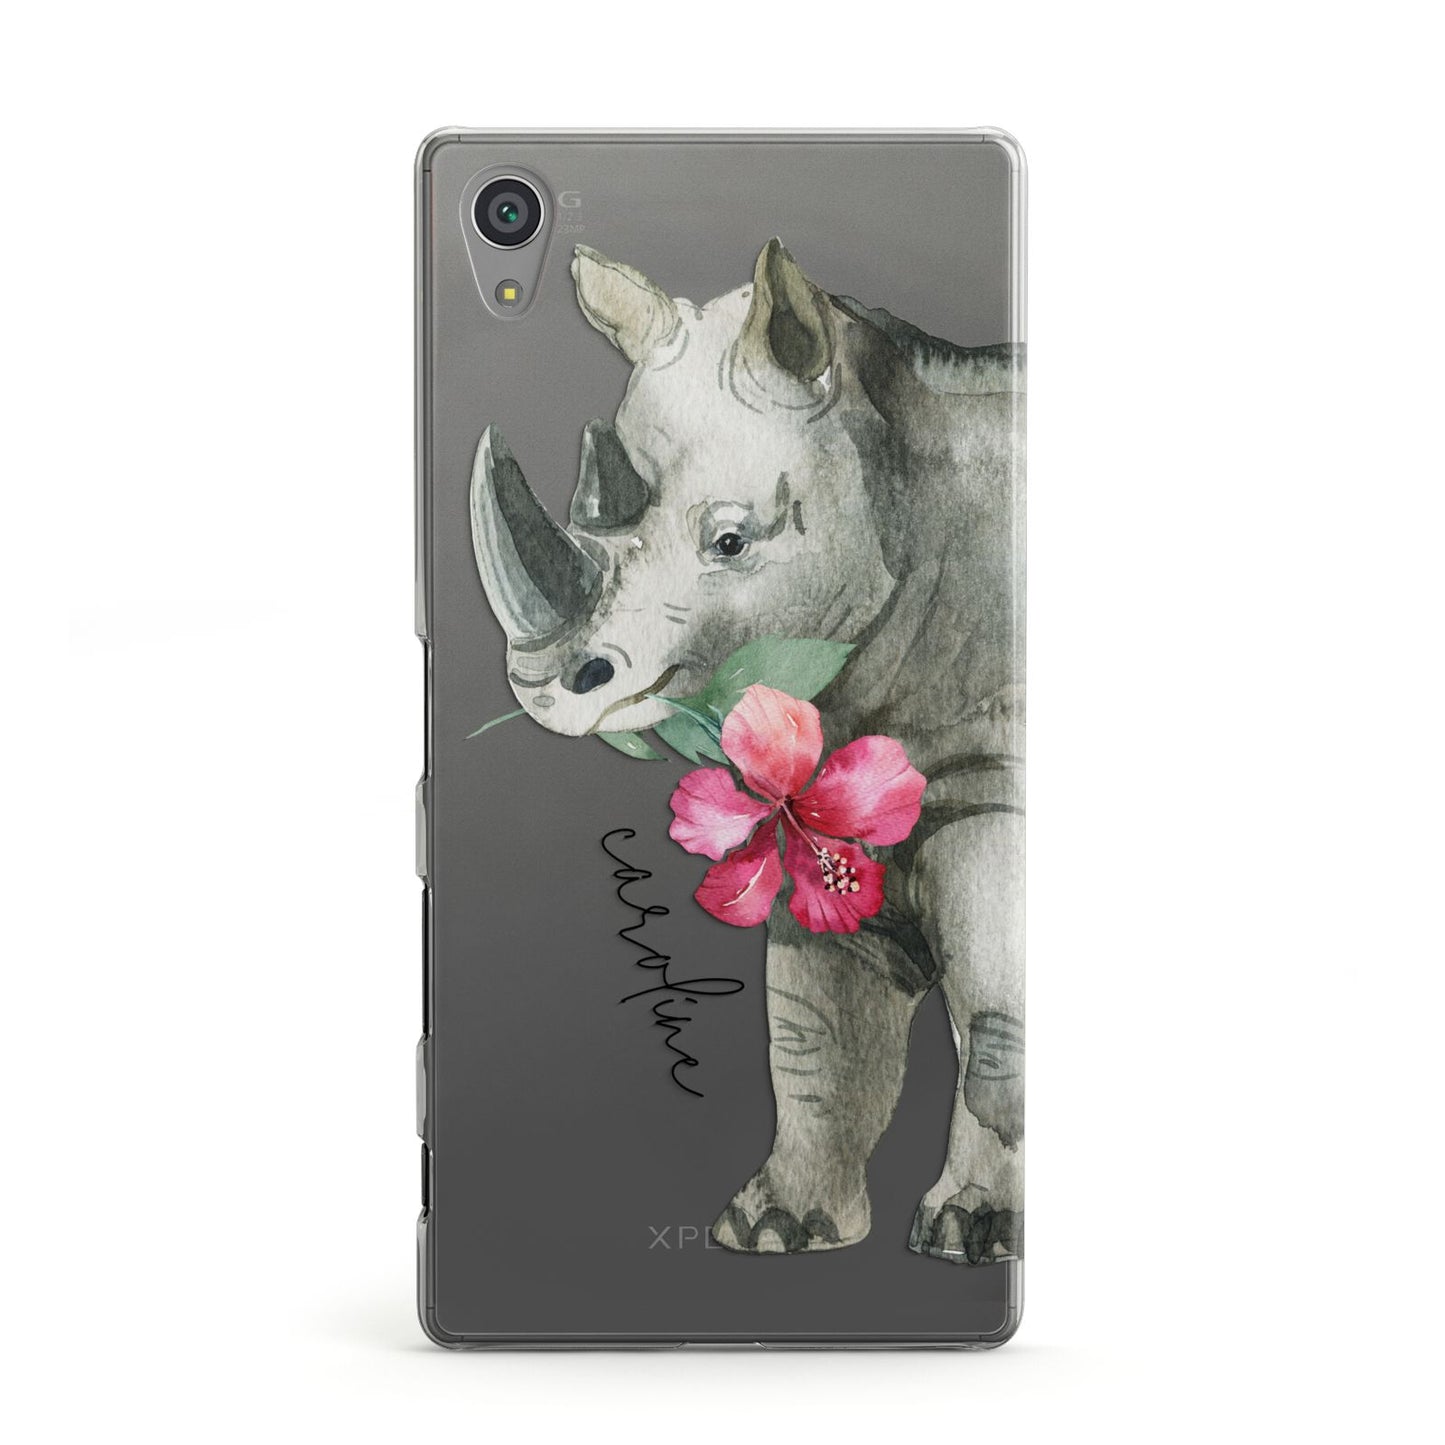 Personalised Rhinoceros Sony Xperia Case